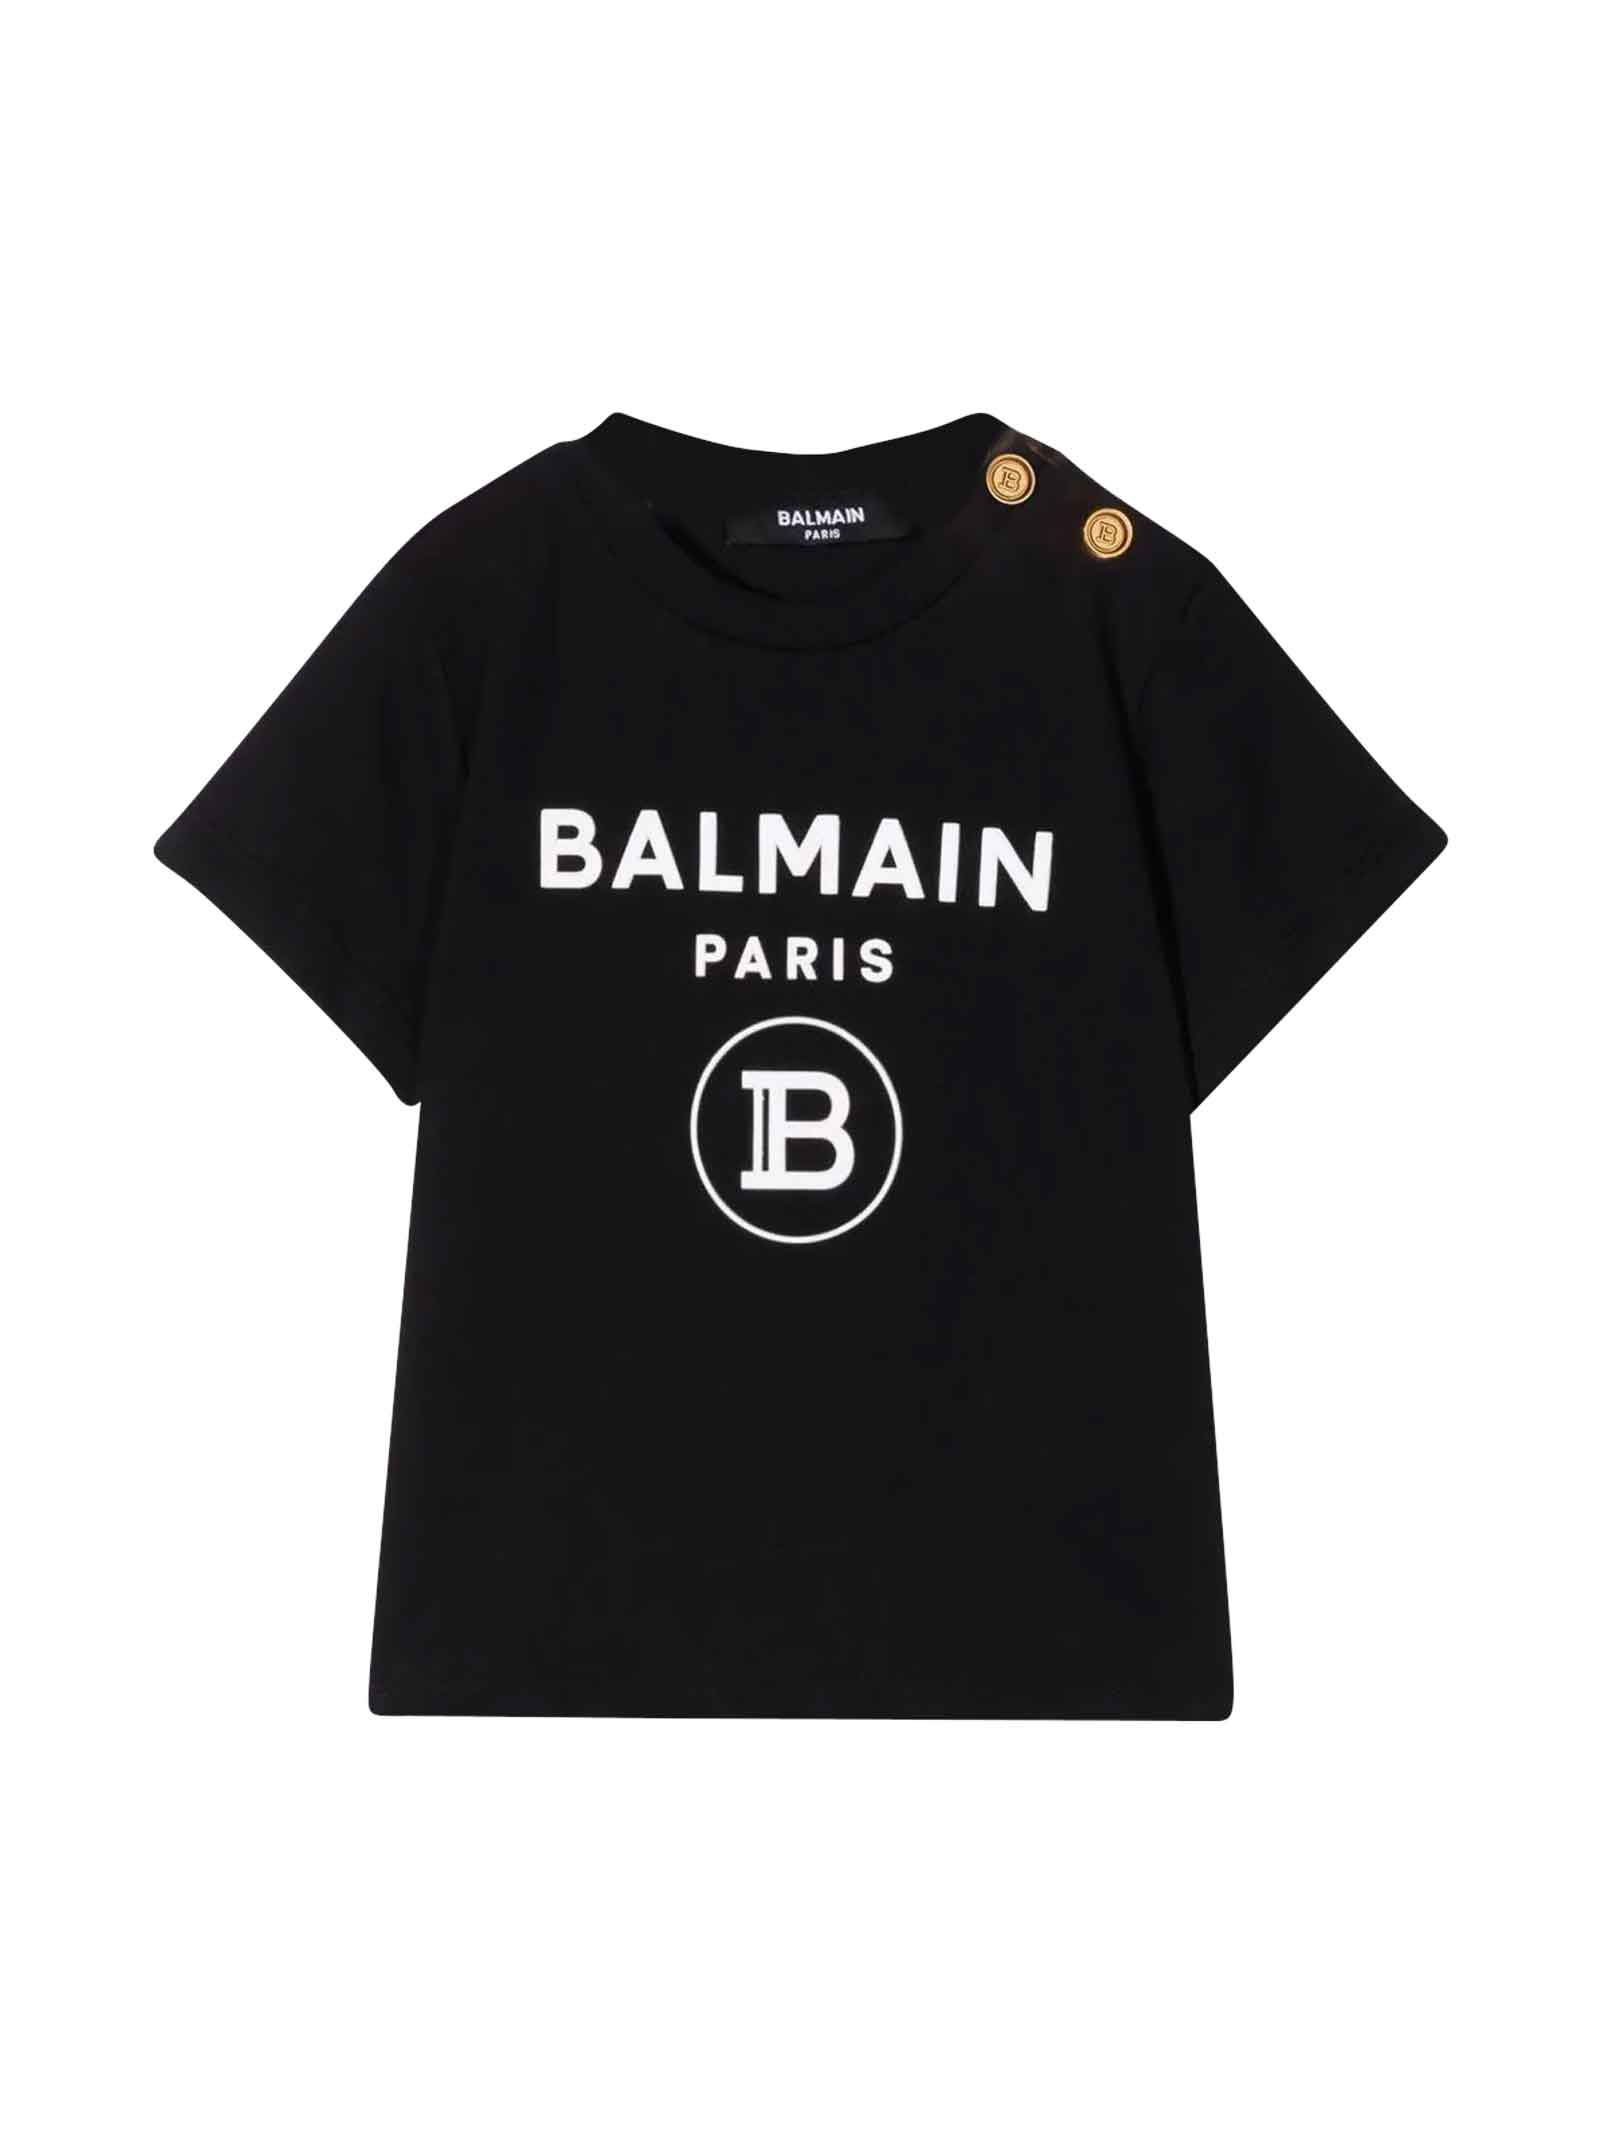 Balmain Black Baby T-shirt With White Print